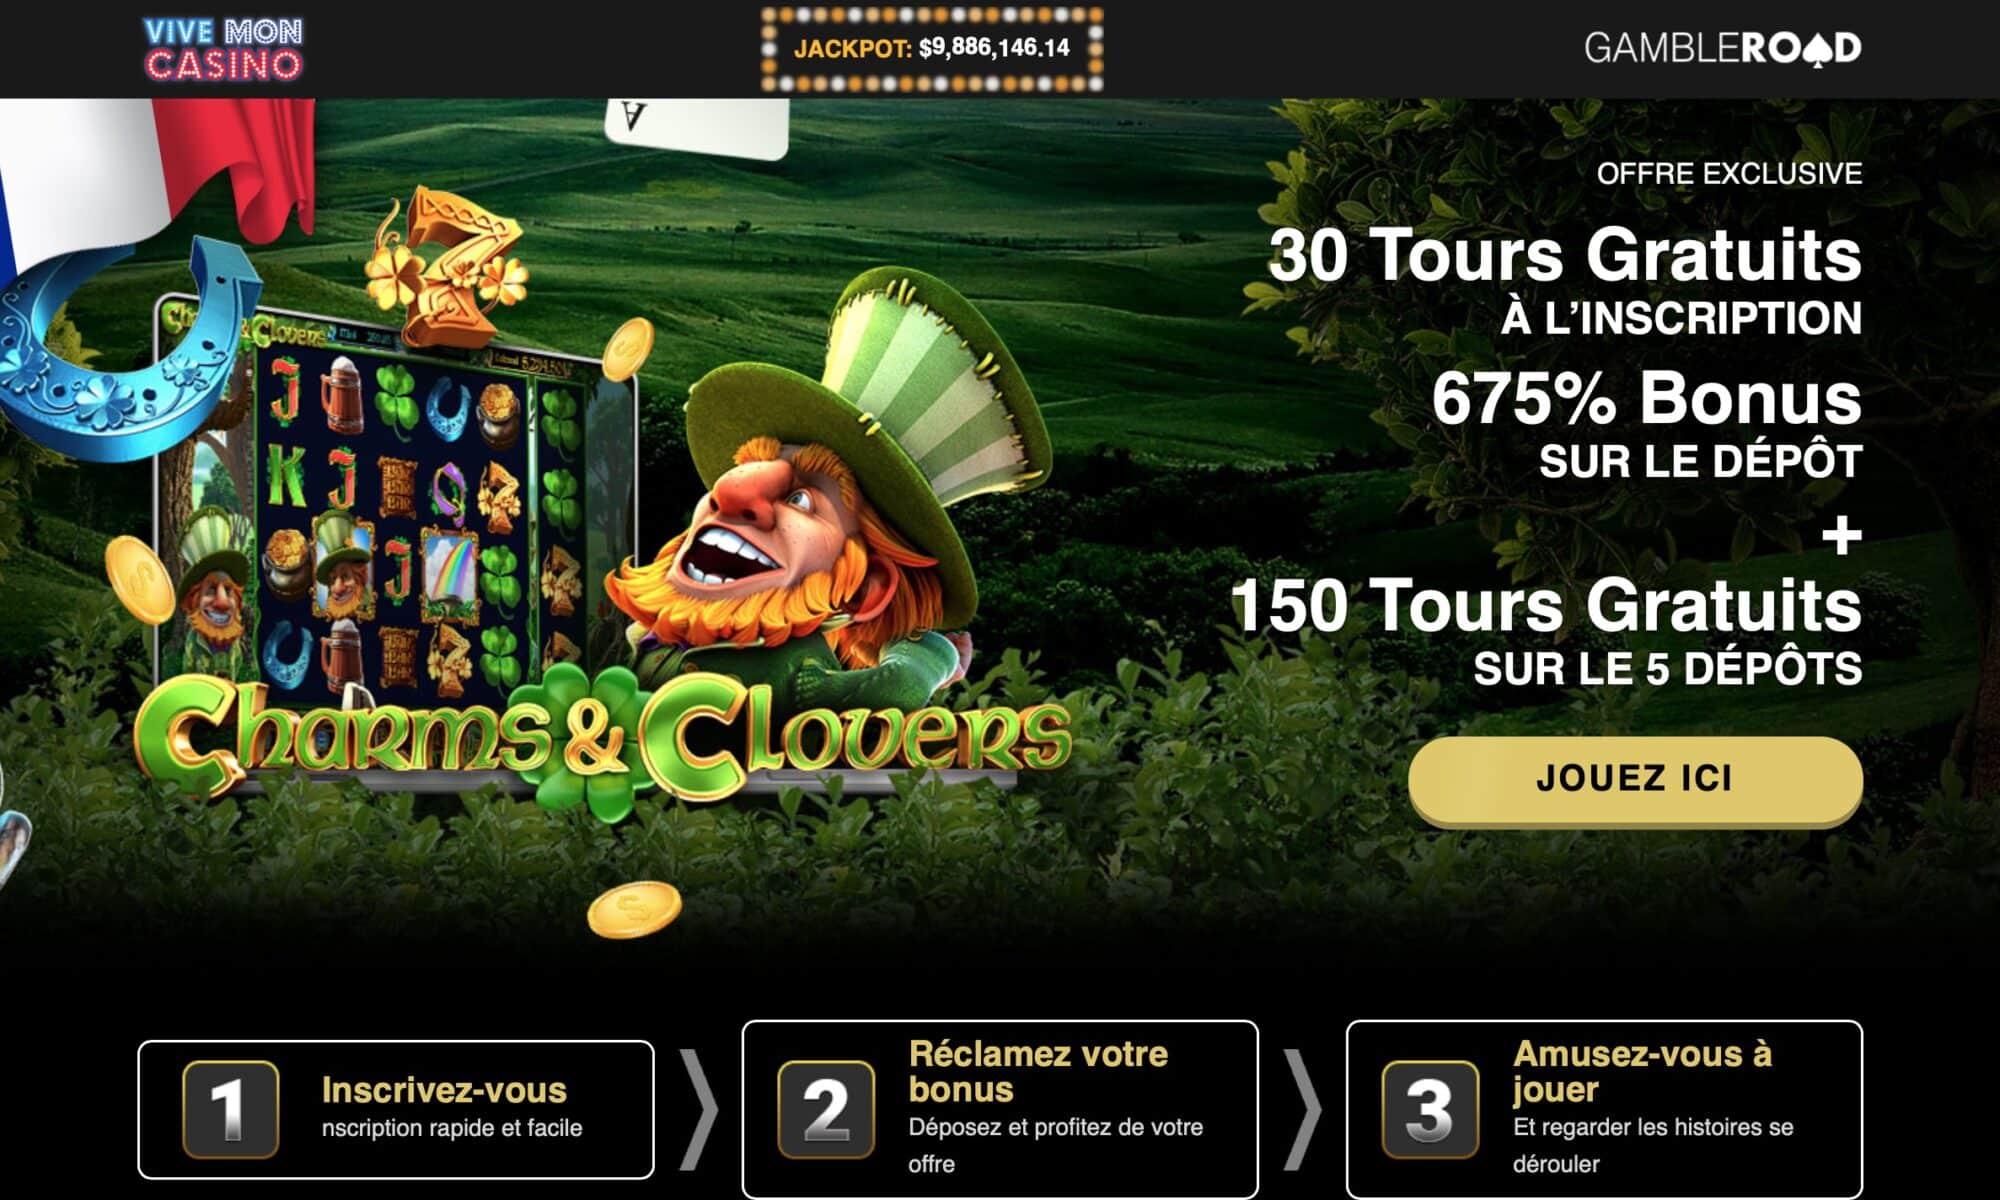 Vive Mon Casino - get 30 free spins + 675% deposit bonus